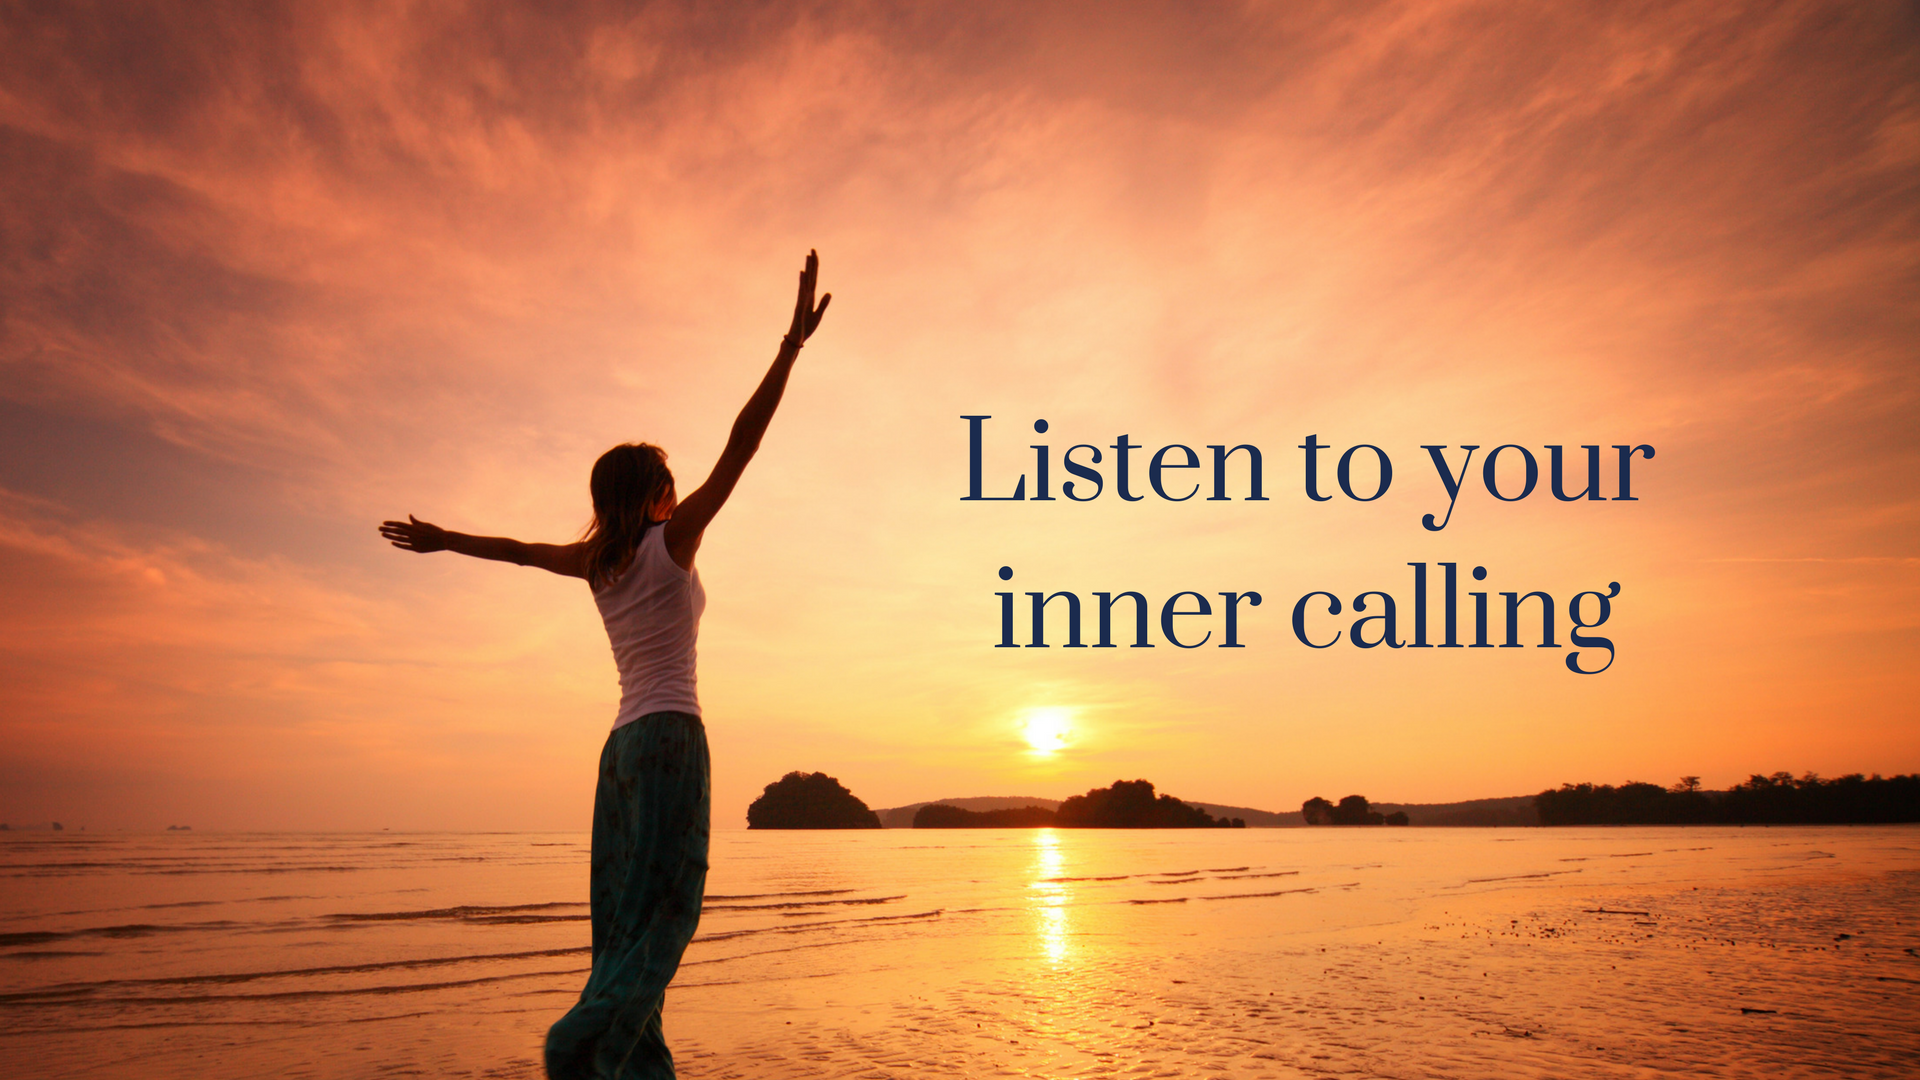 Listen to your inner calling